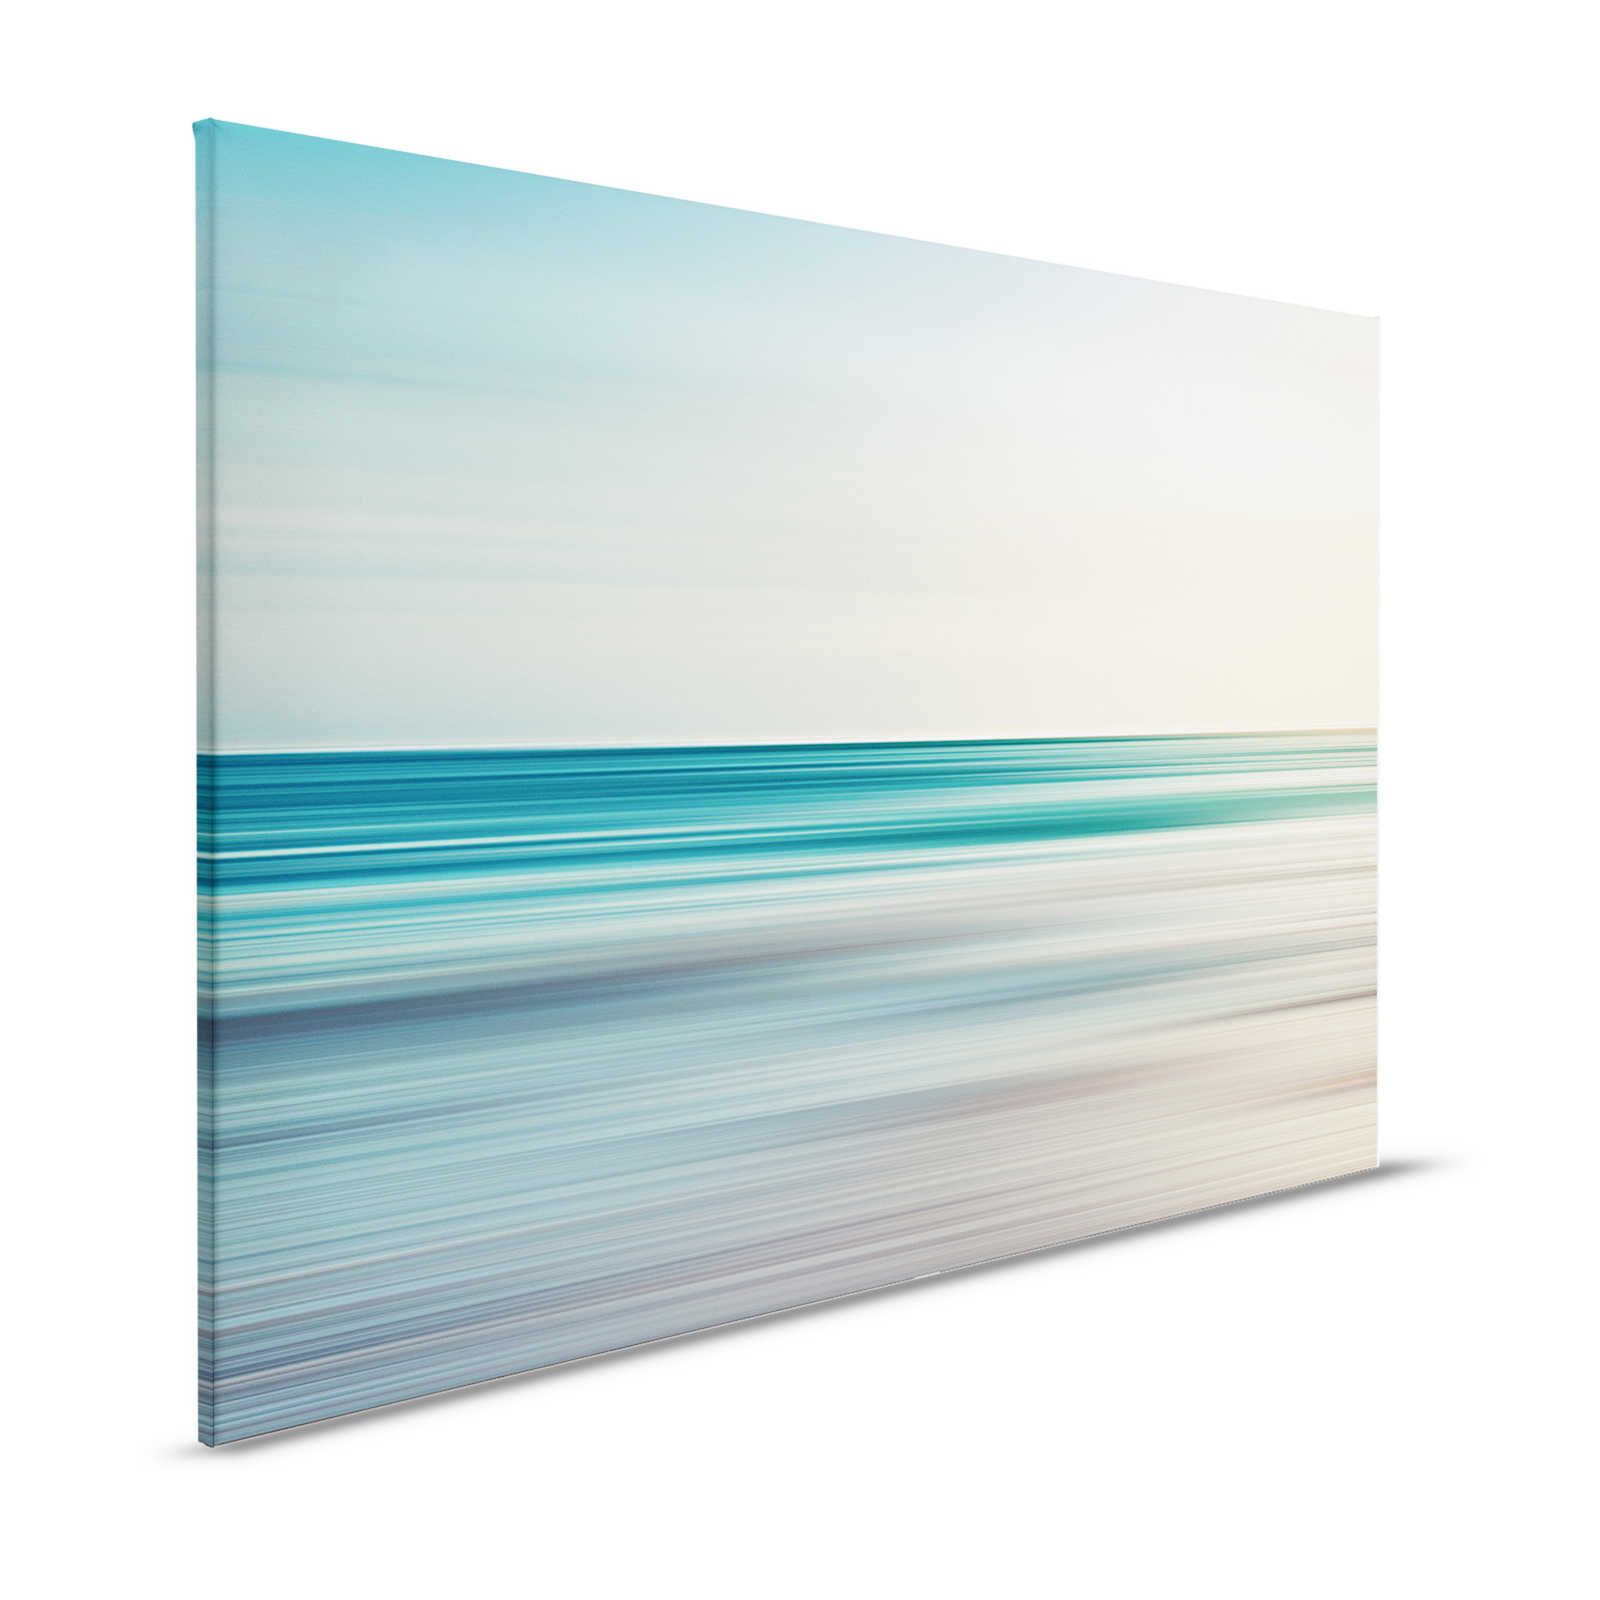 Horizon 1 - Toile paysage abstrait bleu - 1,20 m x 0,80 m
